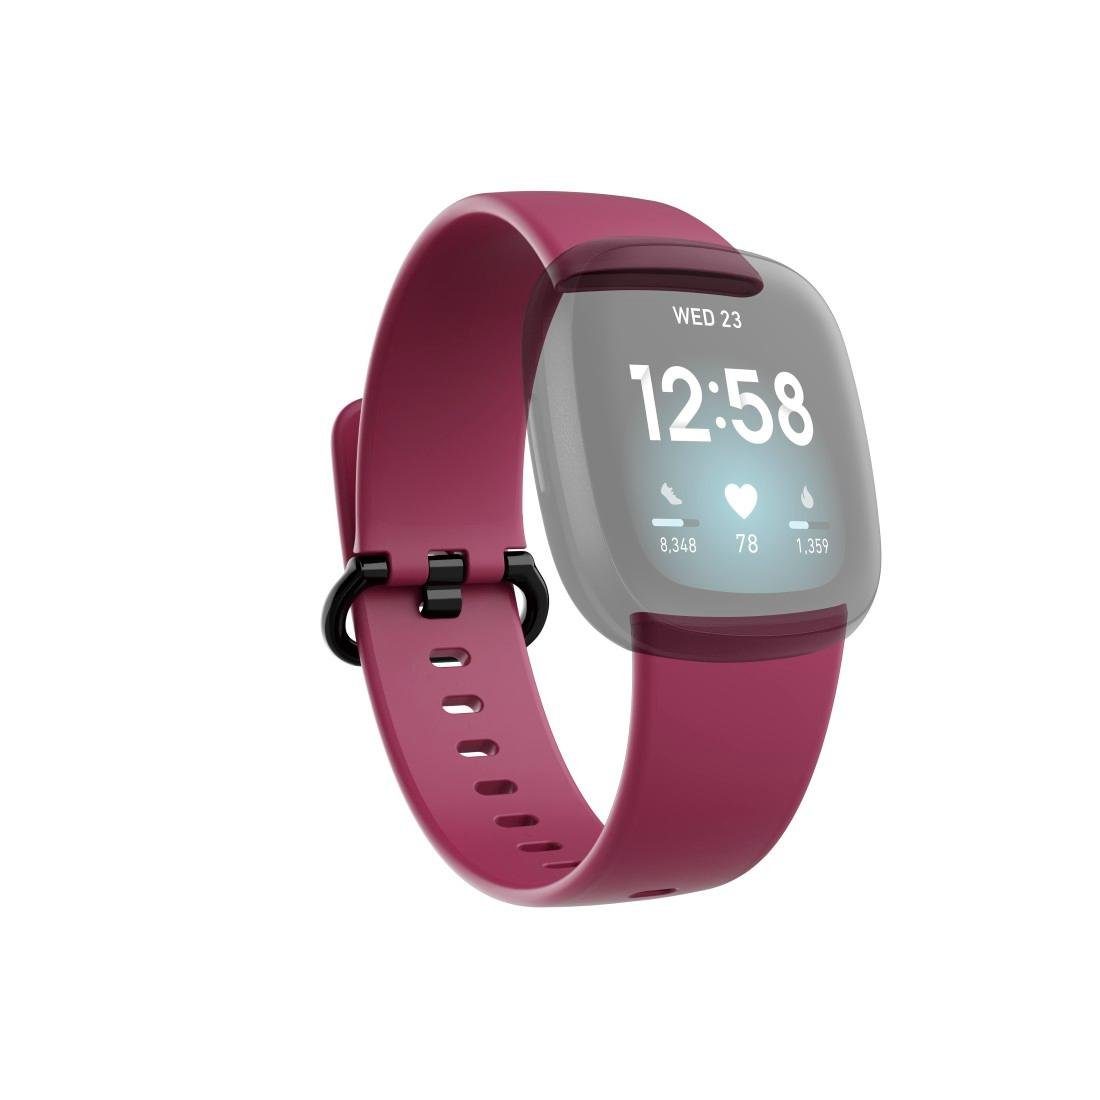 Neueste Produkte aus dem Ausland Hama Smartwatch-Armband Ersatzarmband für Fitbit Bordeaux 22 (2), cm/21 3/4/Sense TPU, cm Versa